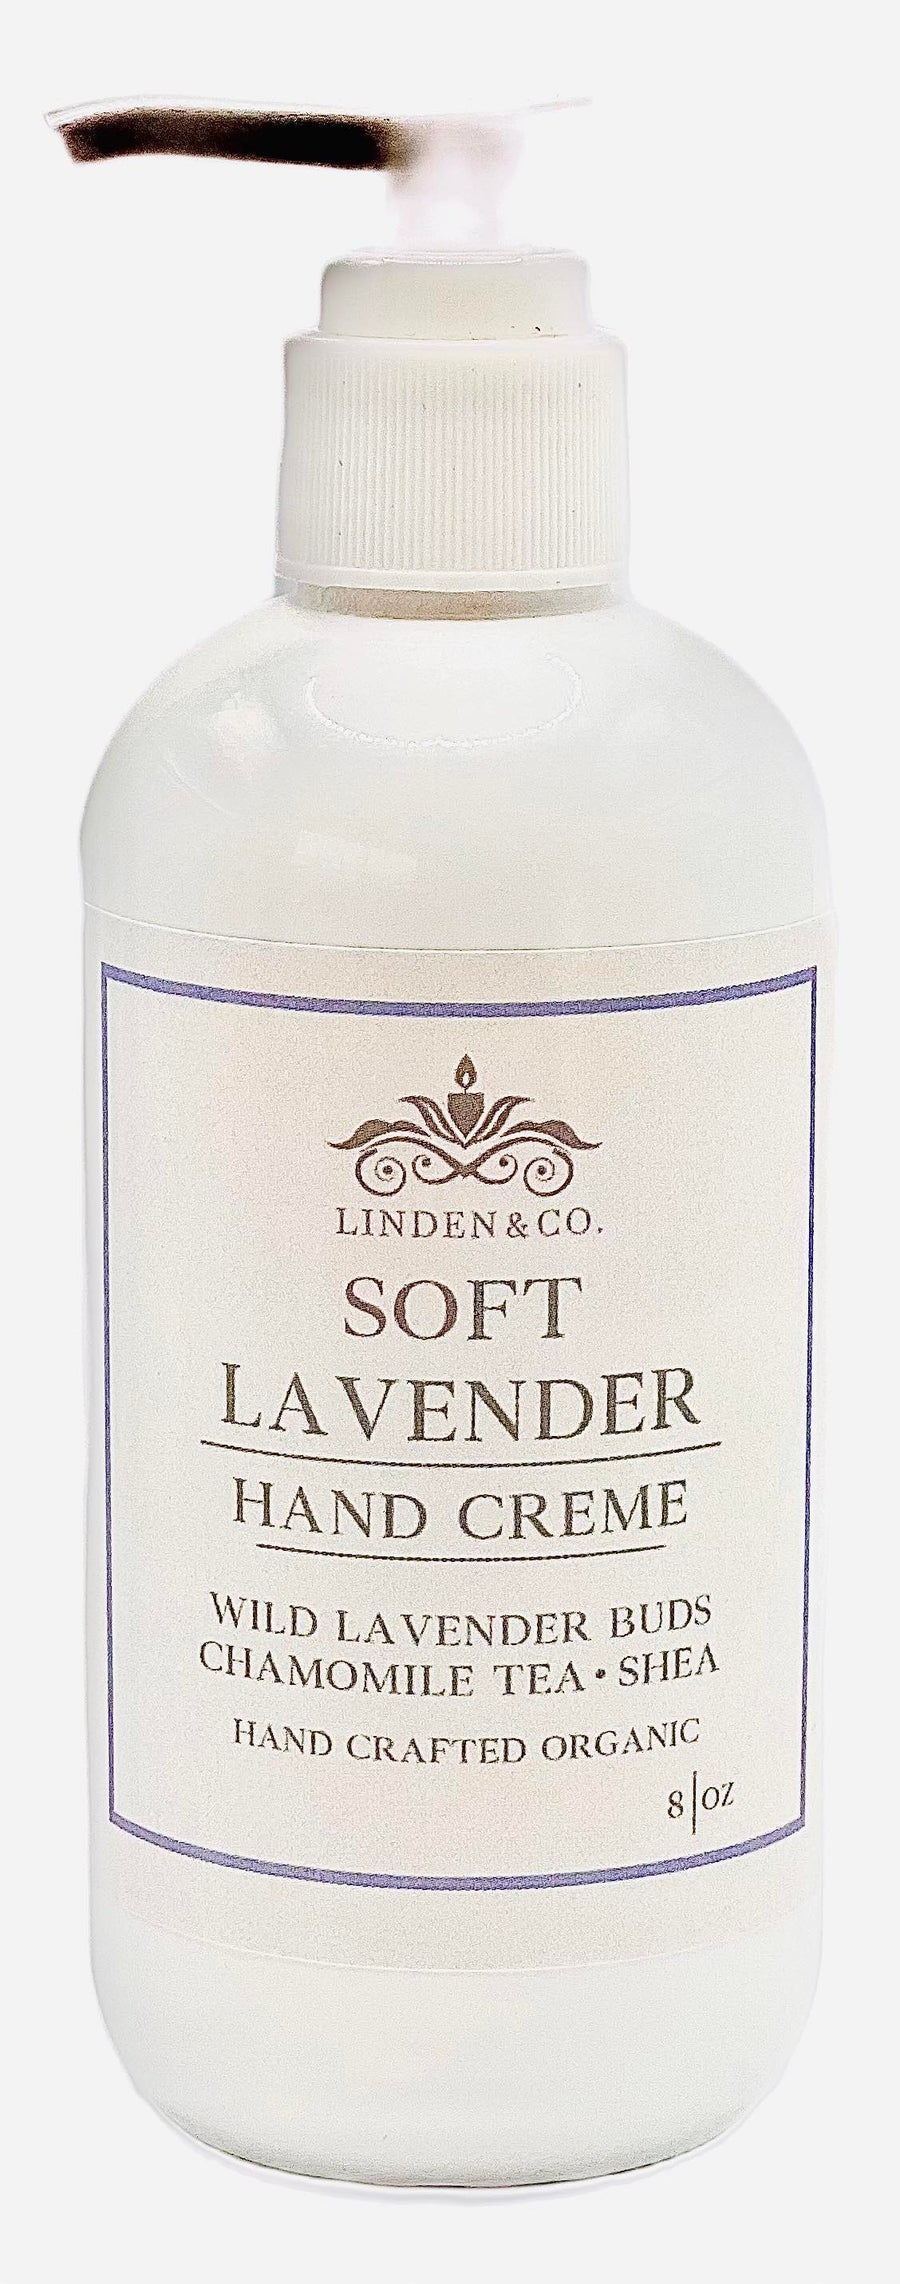 Soft Lavender Hand Creme